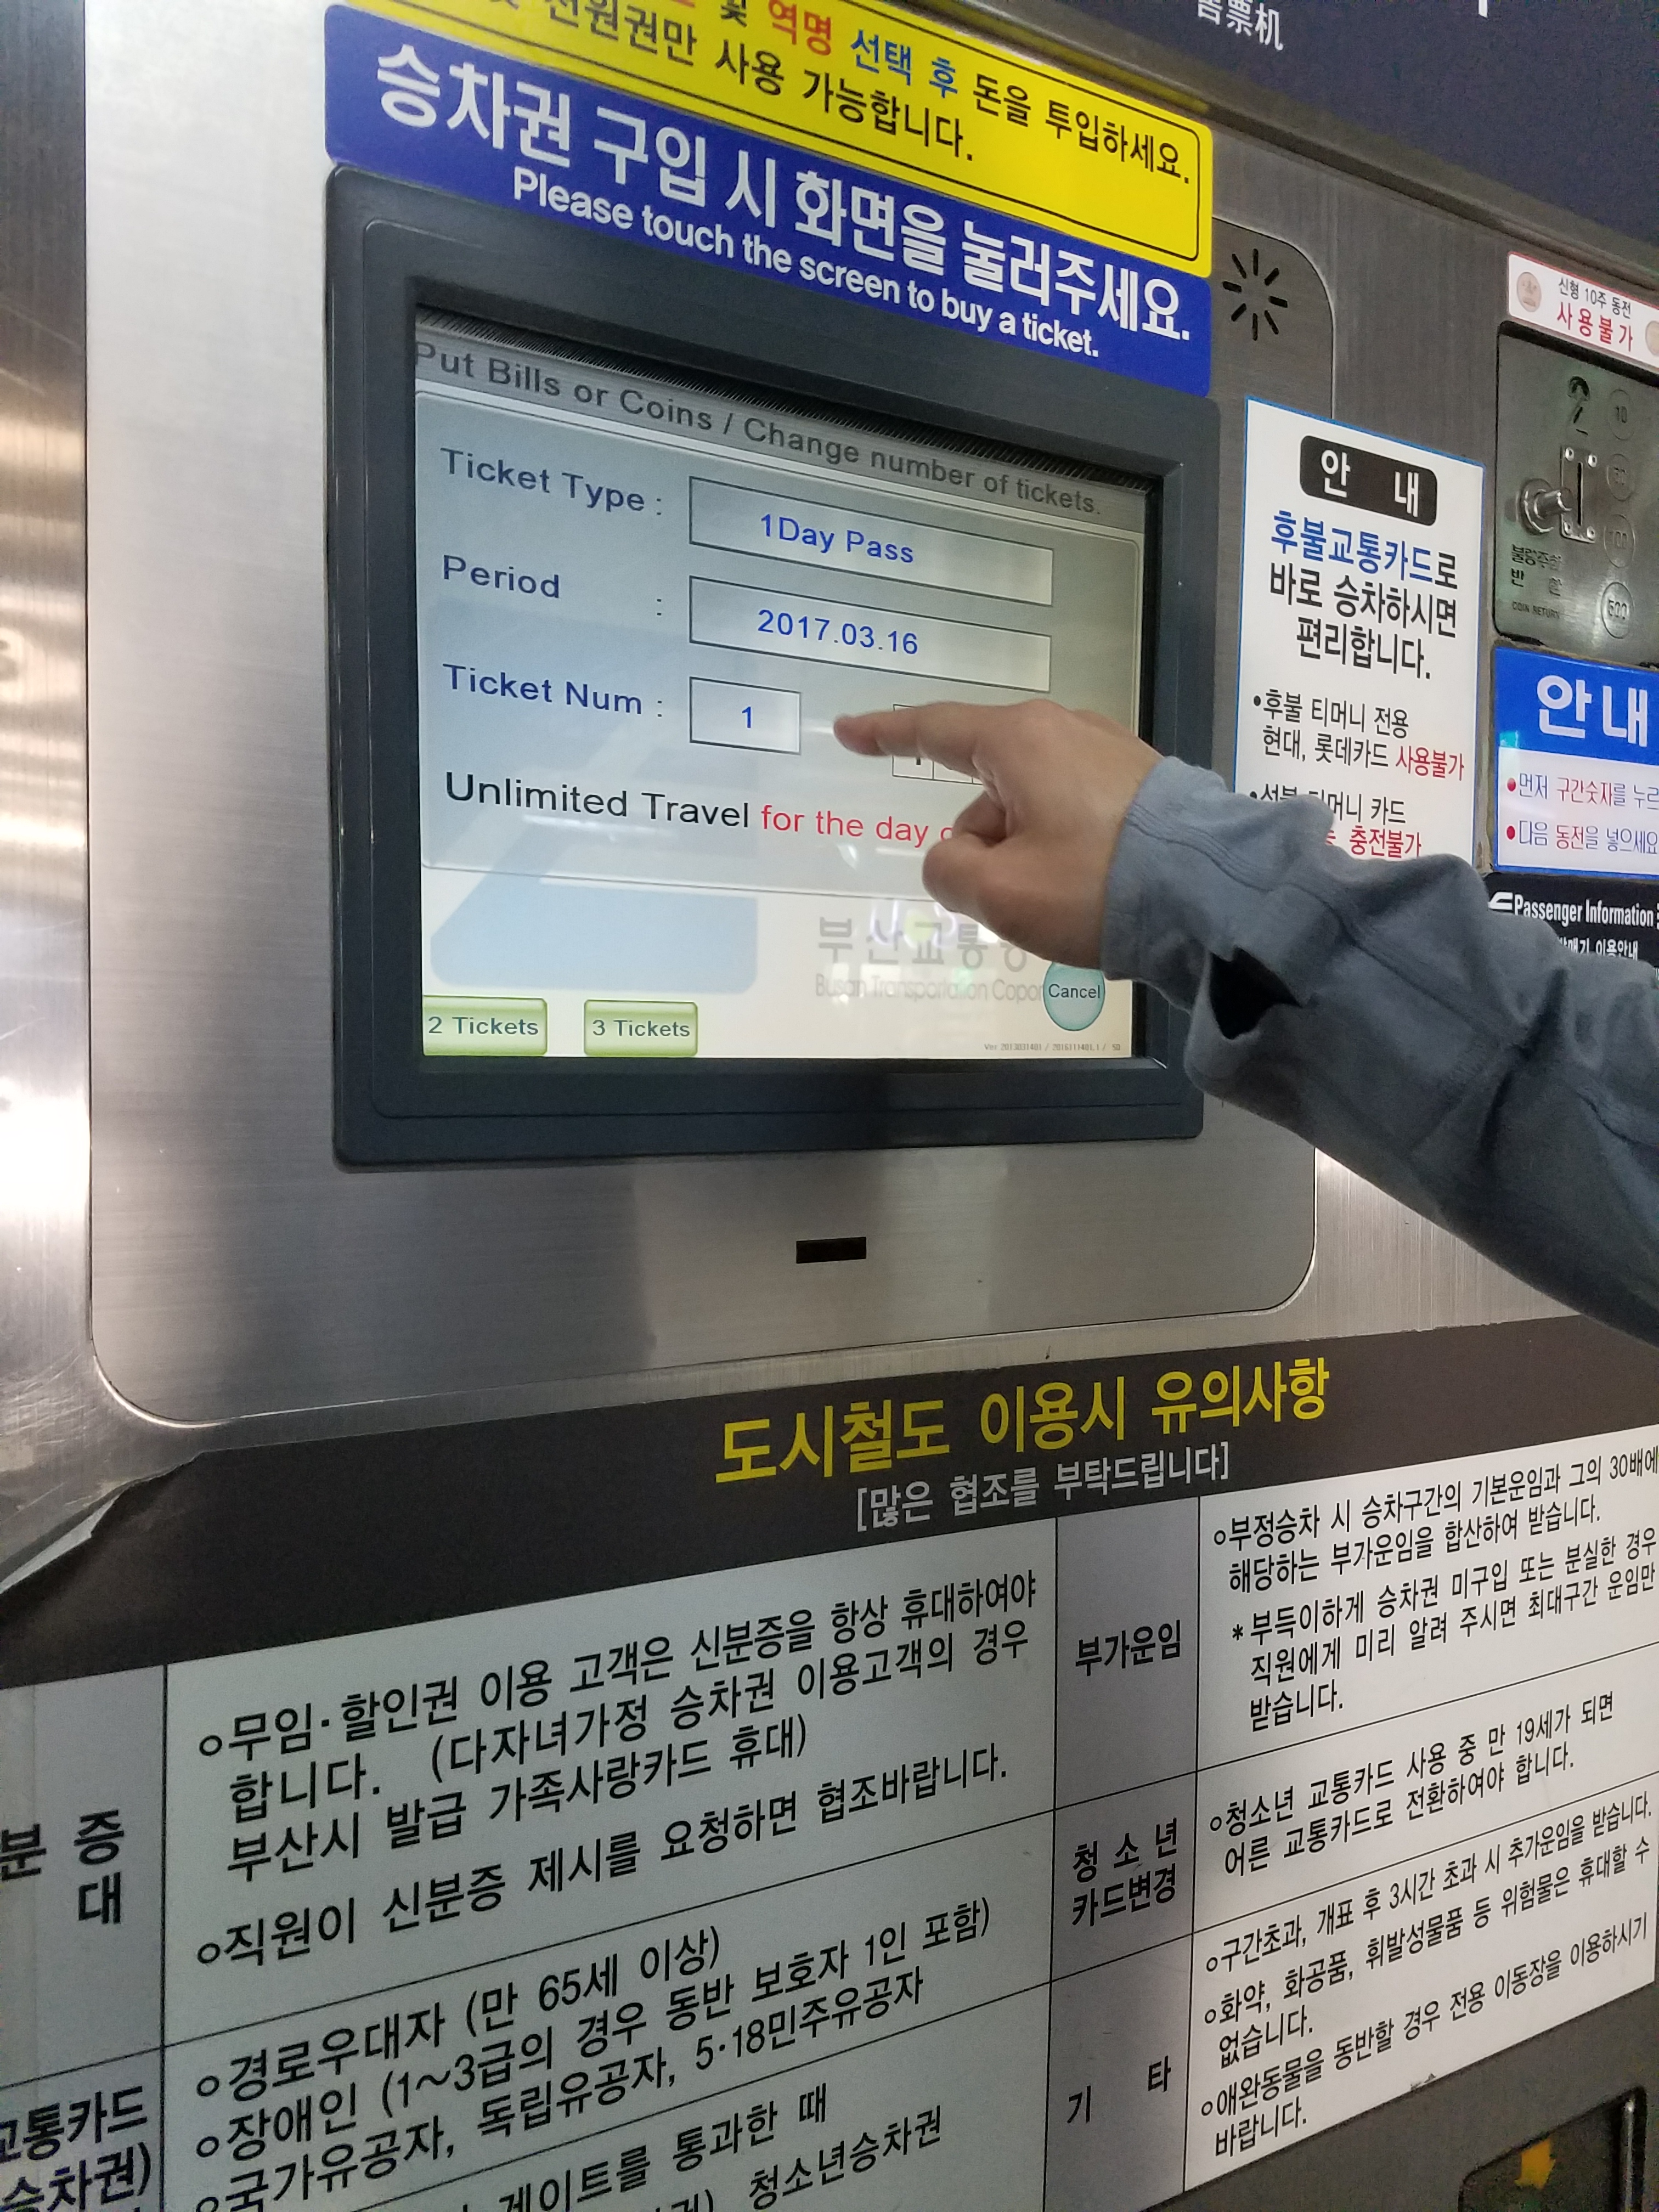 Buying 1 Day Bus/Train pass in Busan